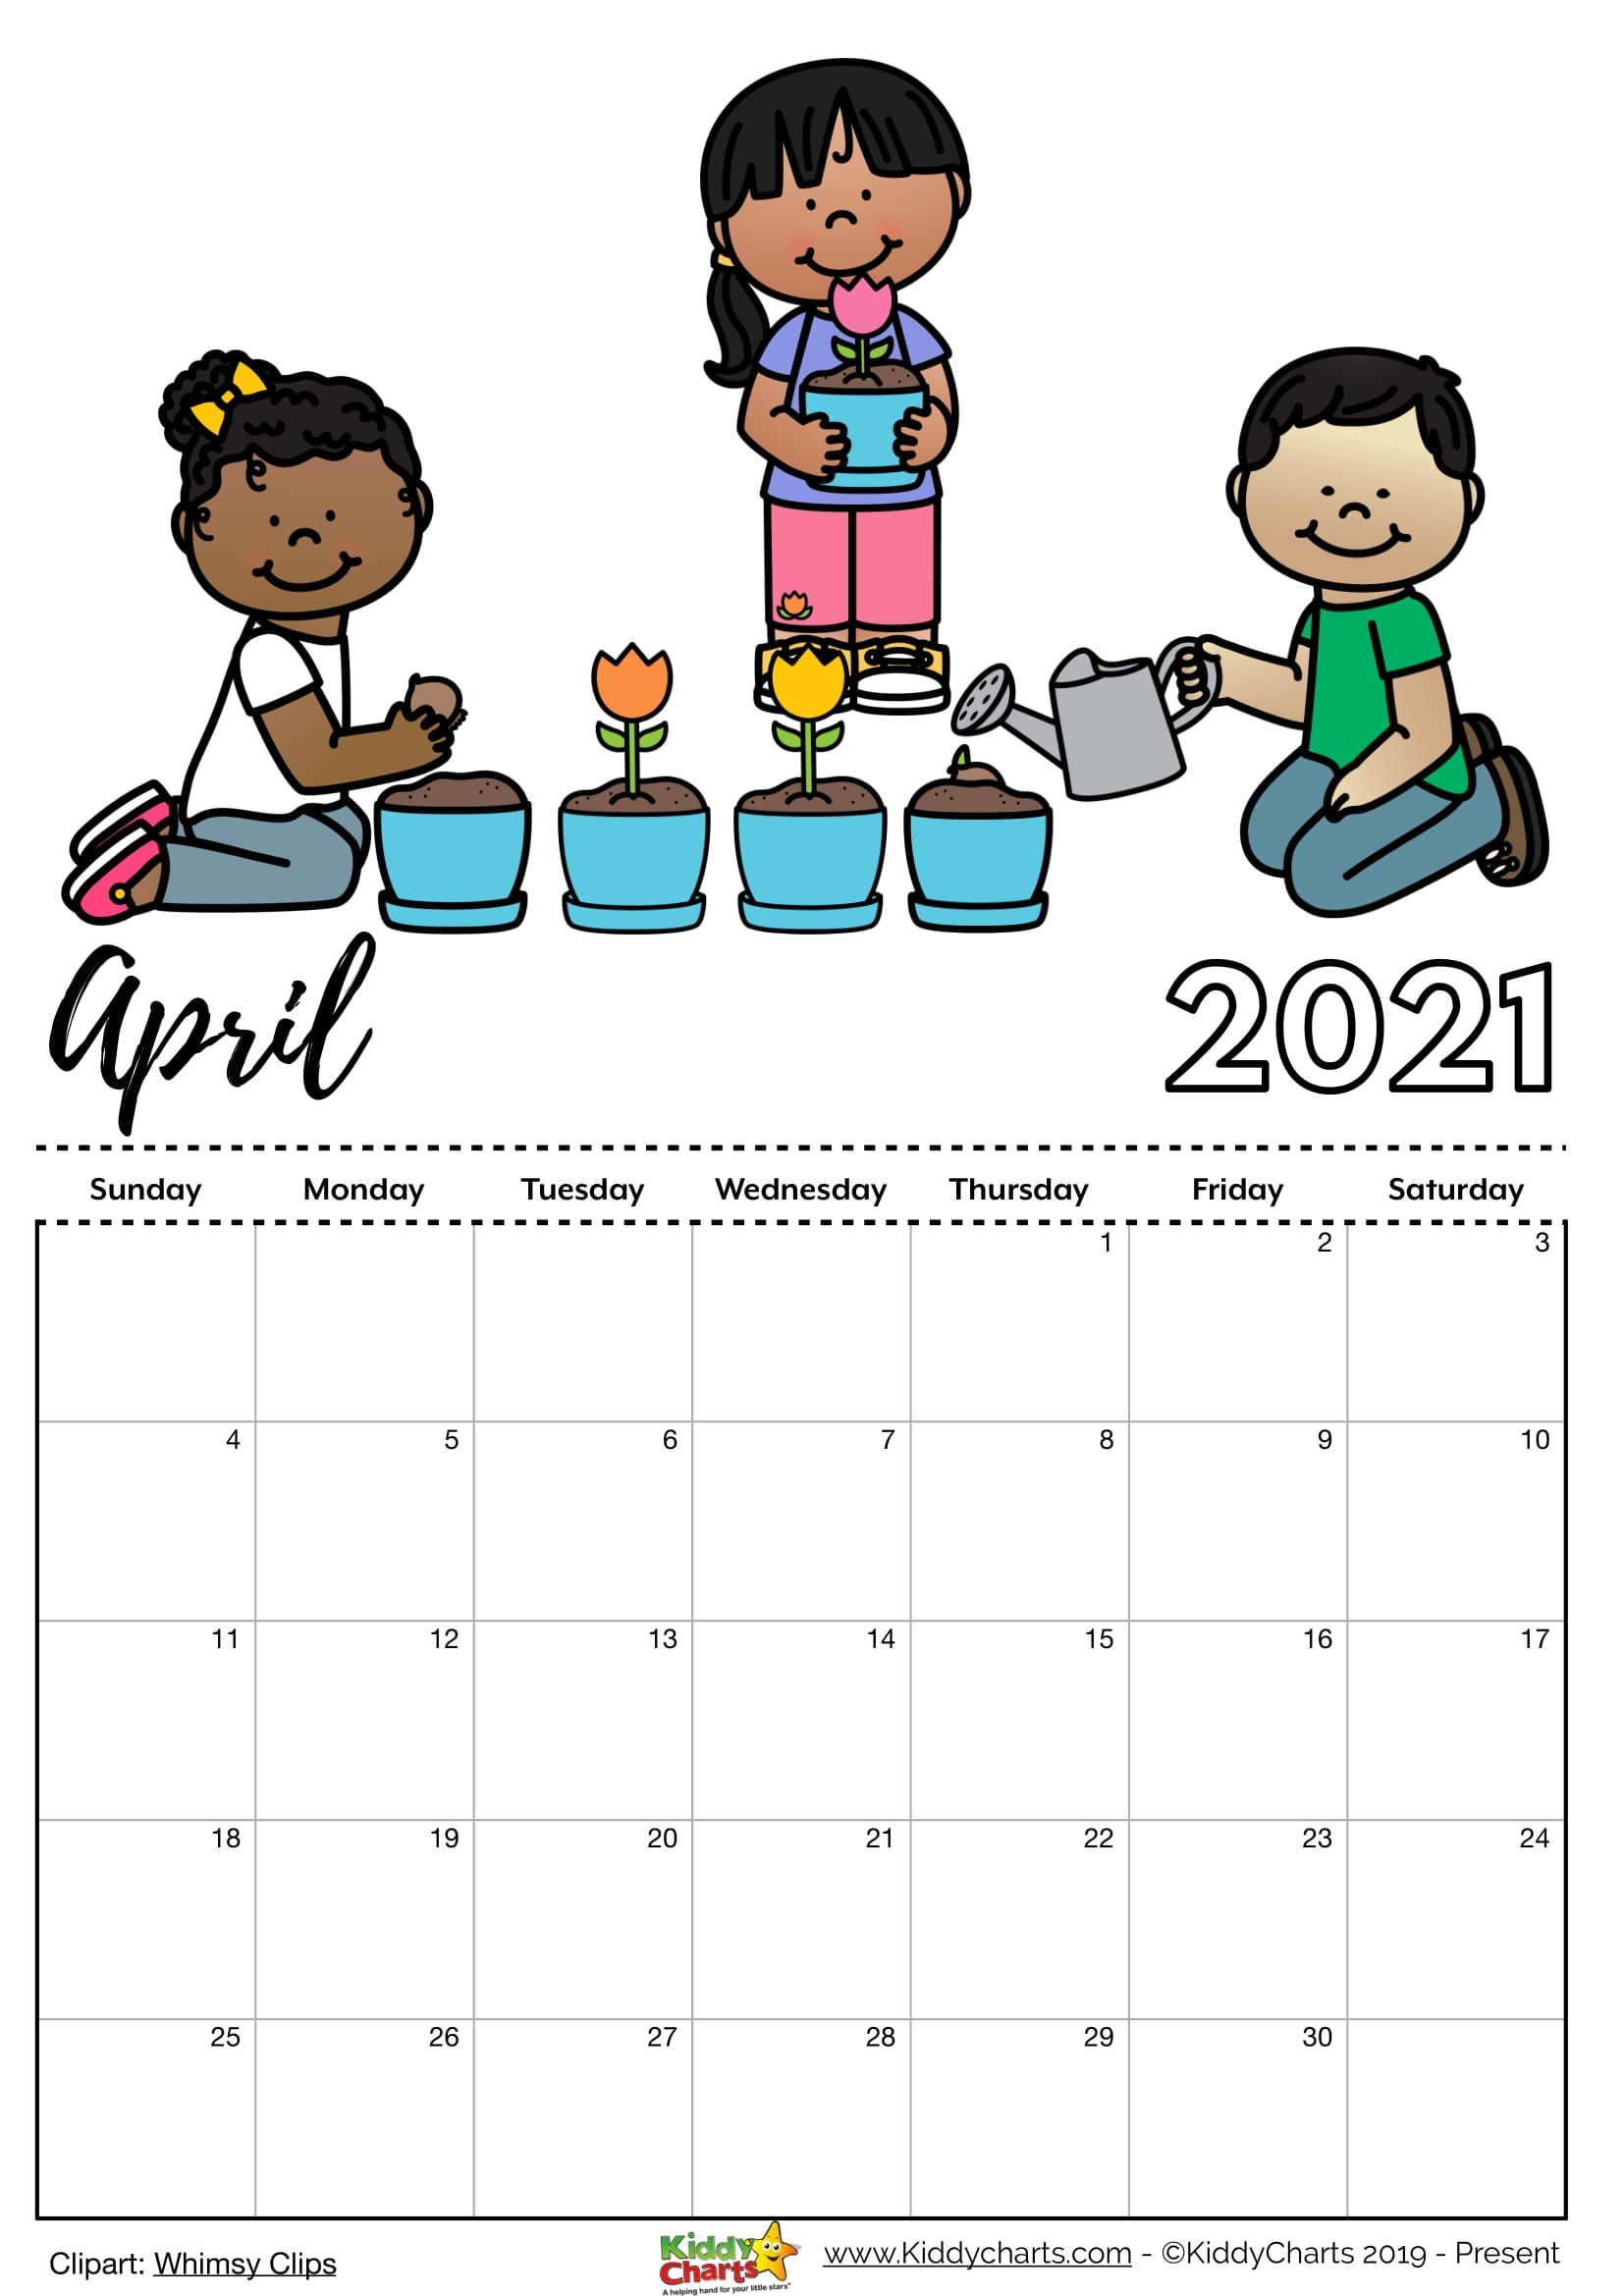 Free Printable 2021 Calendar: Includes Editable Version